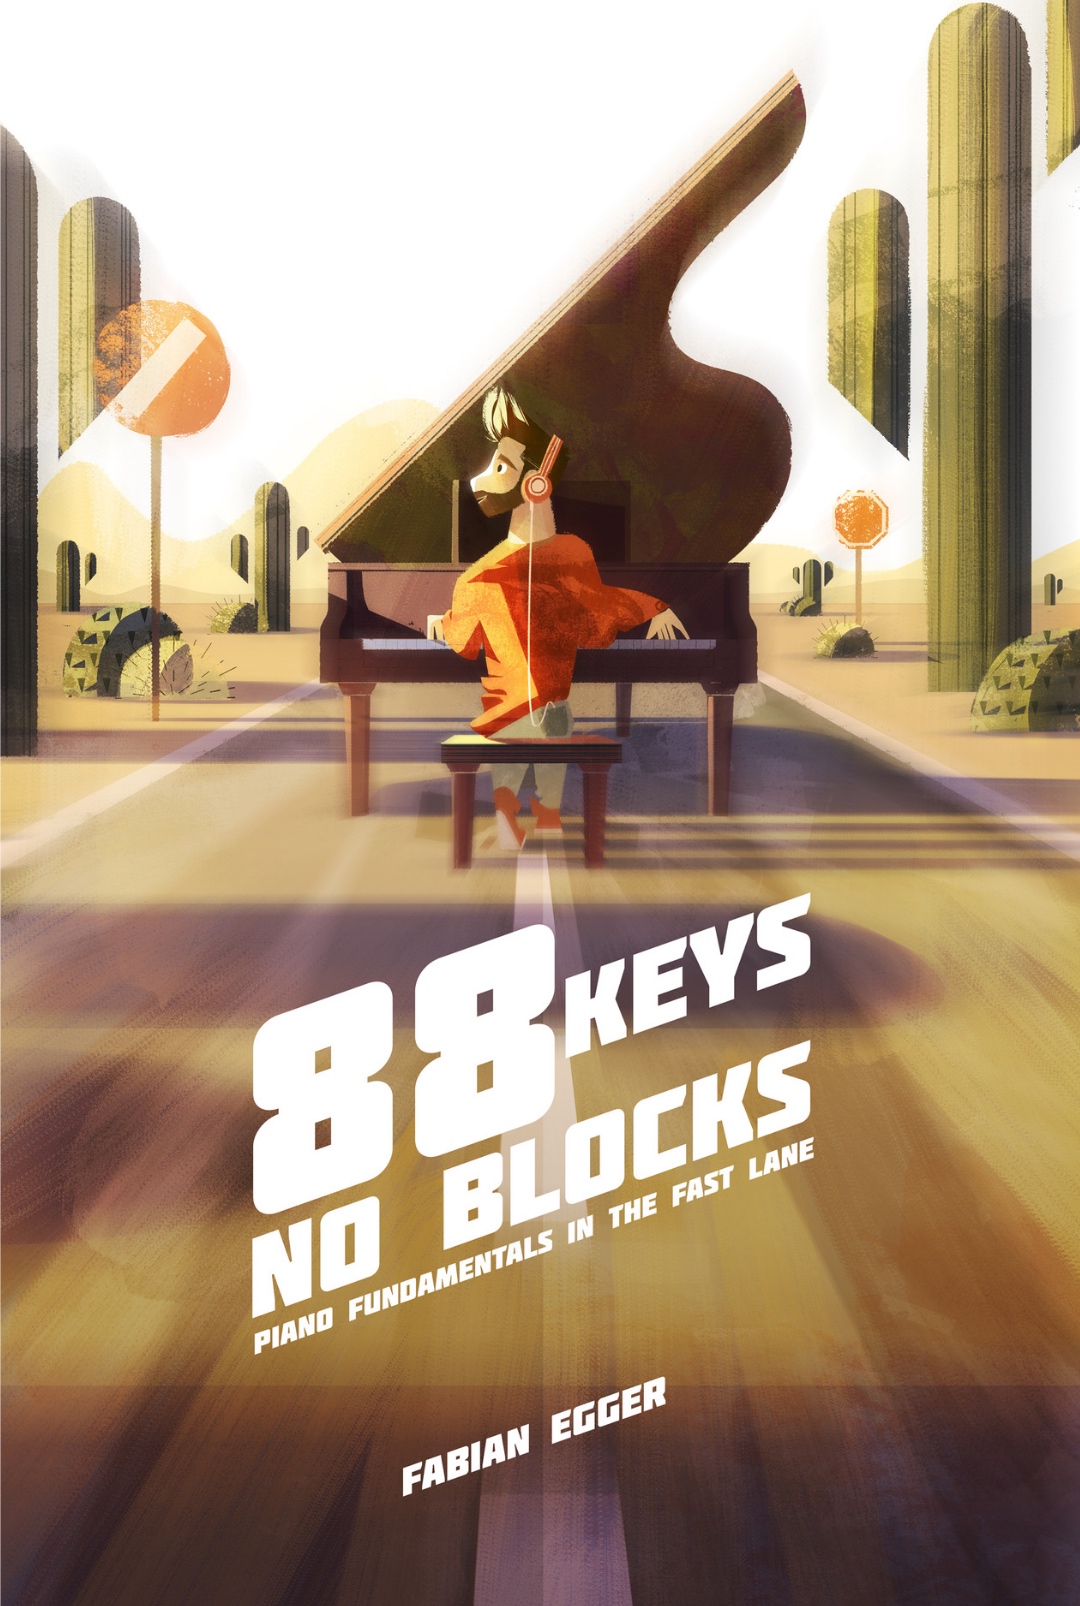 FREE: 88 Keys No Blocks by Fabian Egger